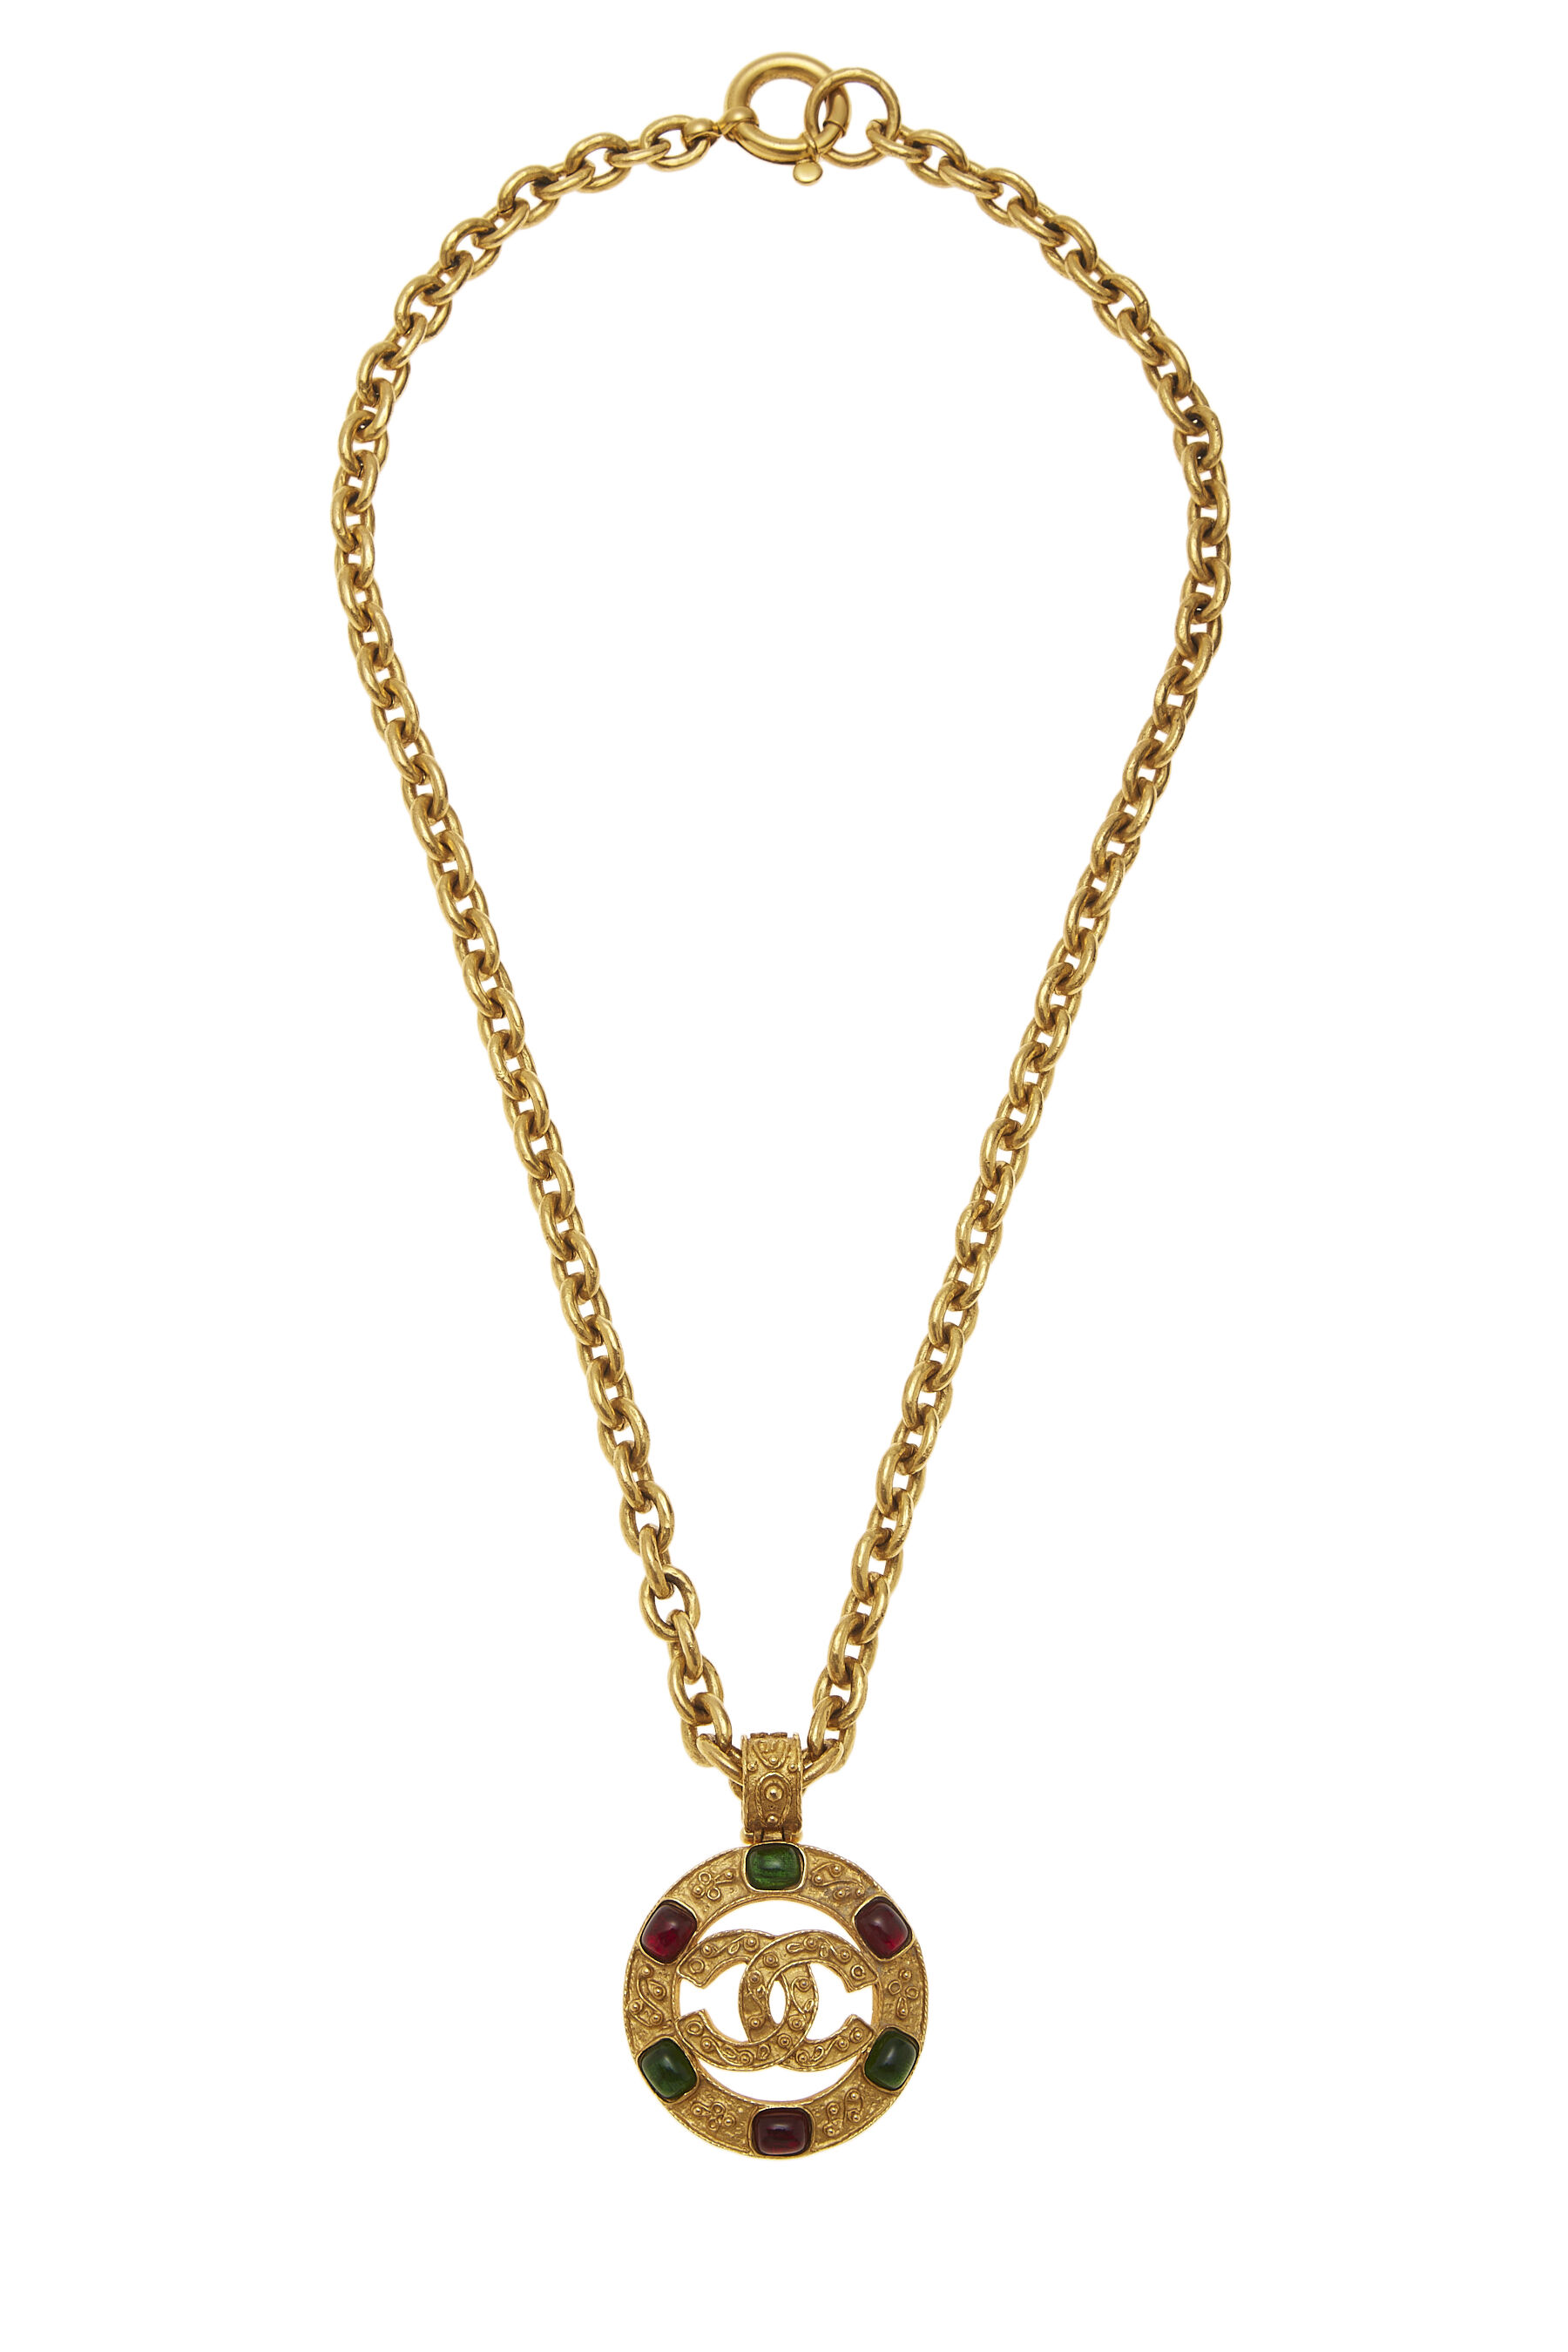 Chanel - Gold Filigree & Multicolor Gripoix Necklace